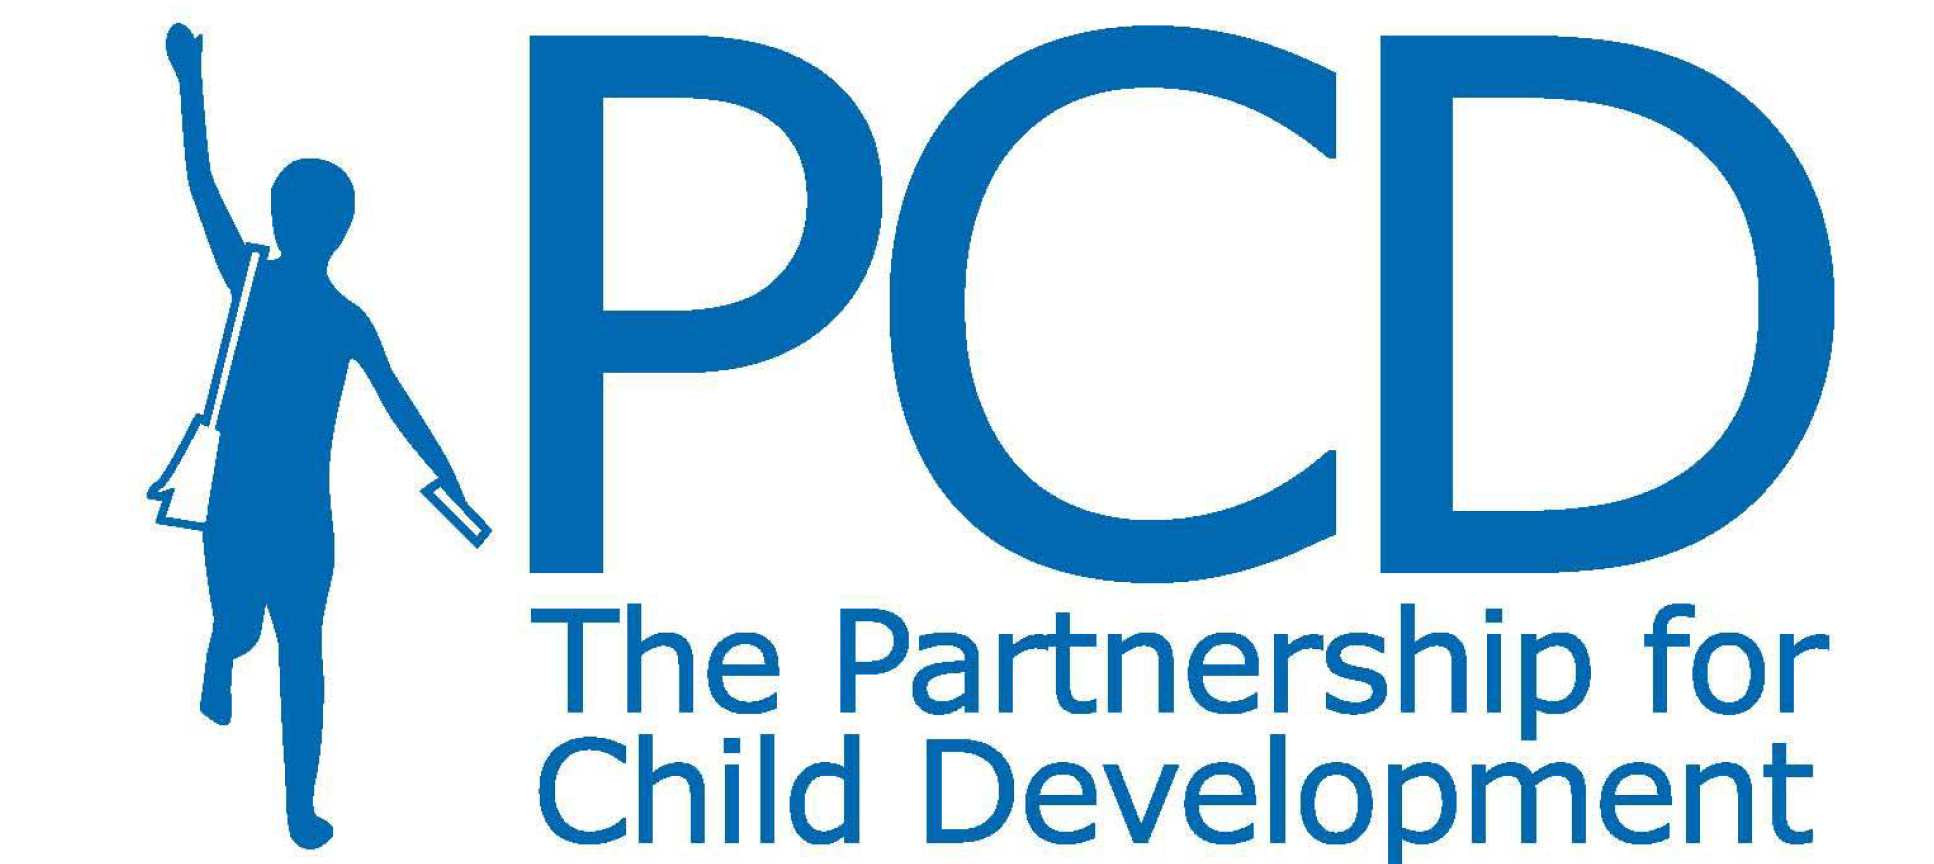 Partnership for Child Development logo